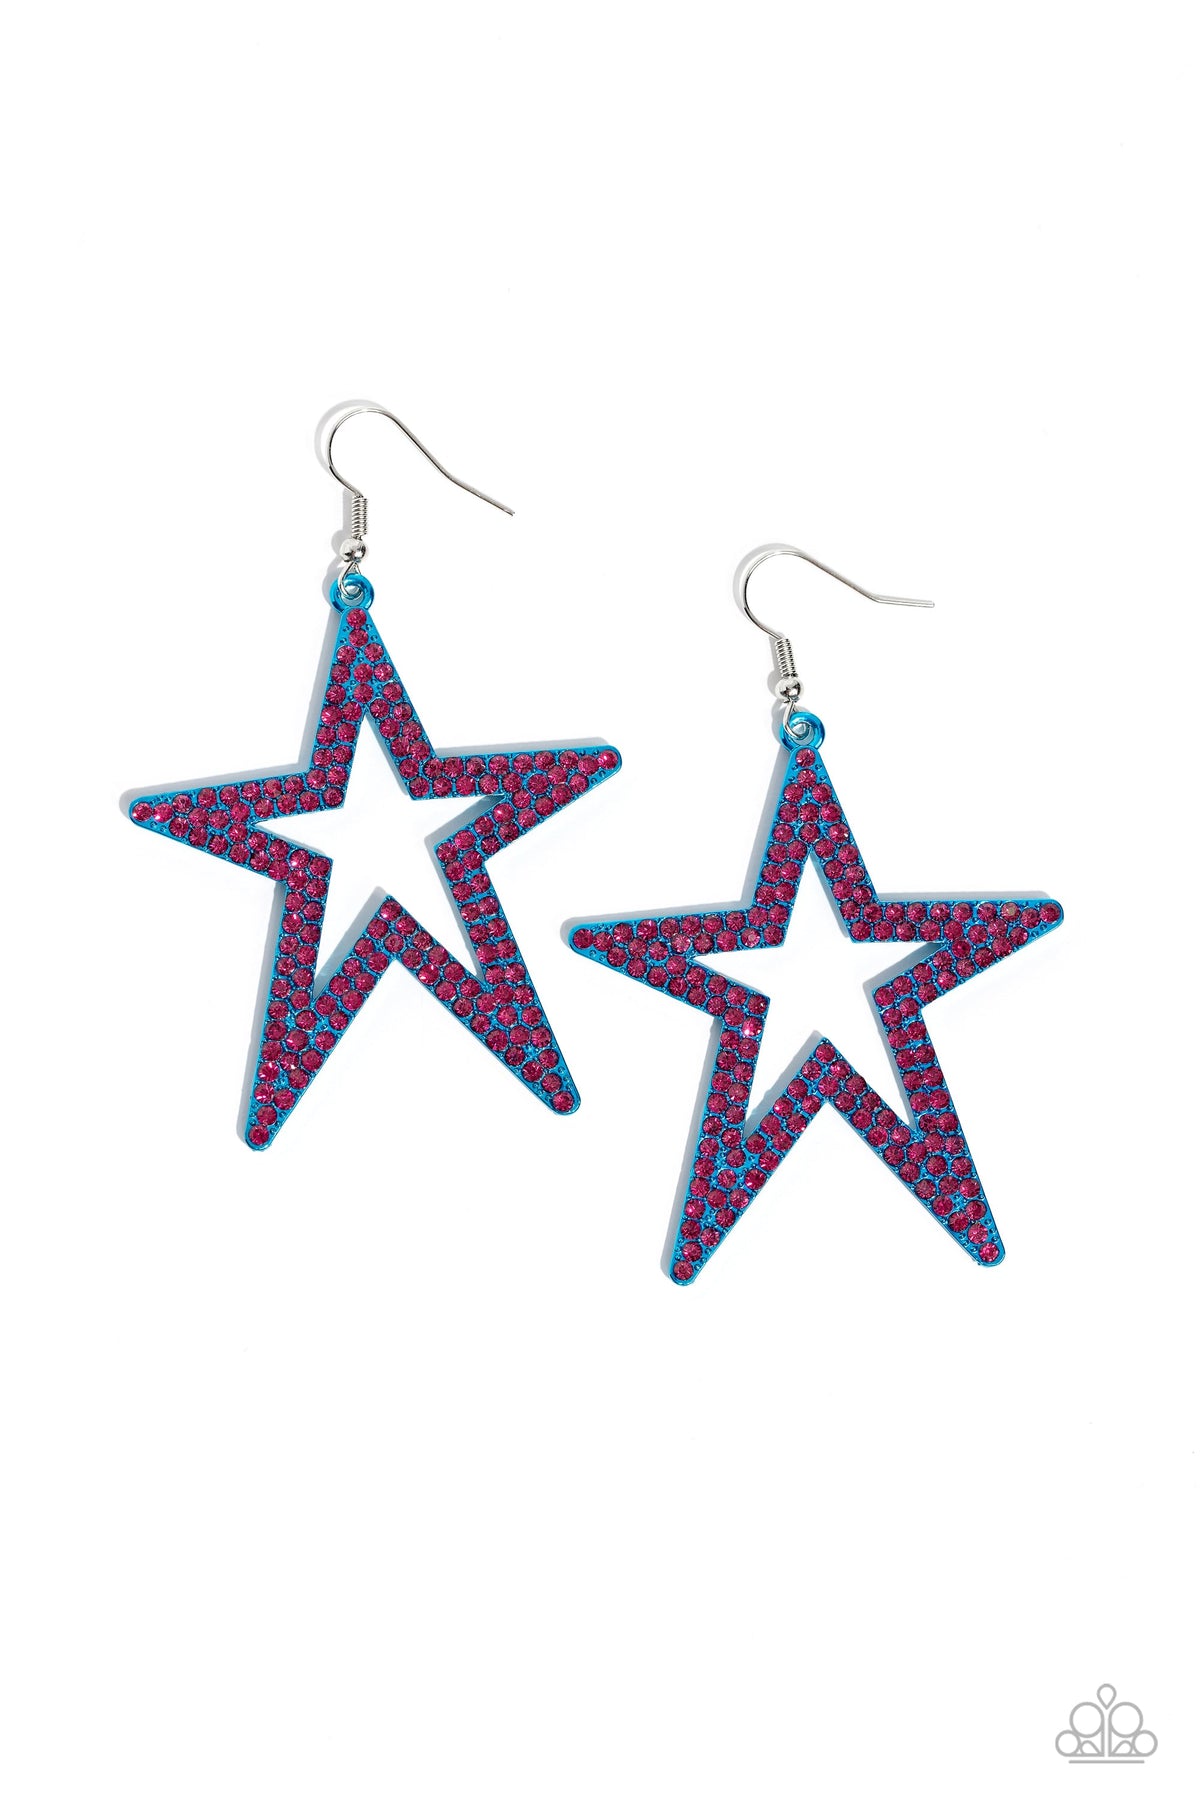 Rockstar Energy Blue &amp; Pink Rhinestone Star Earrings - Paparazzi Accessories- lightbox - CarasShop.com - $5 Jewelry by Cara Jewels